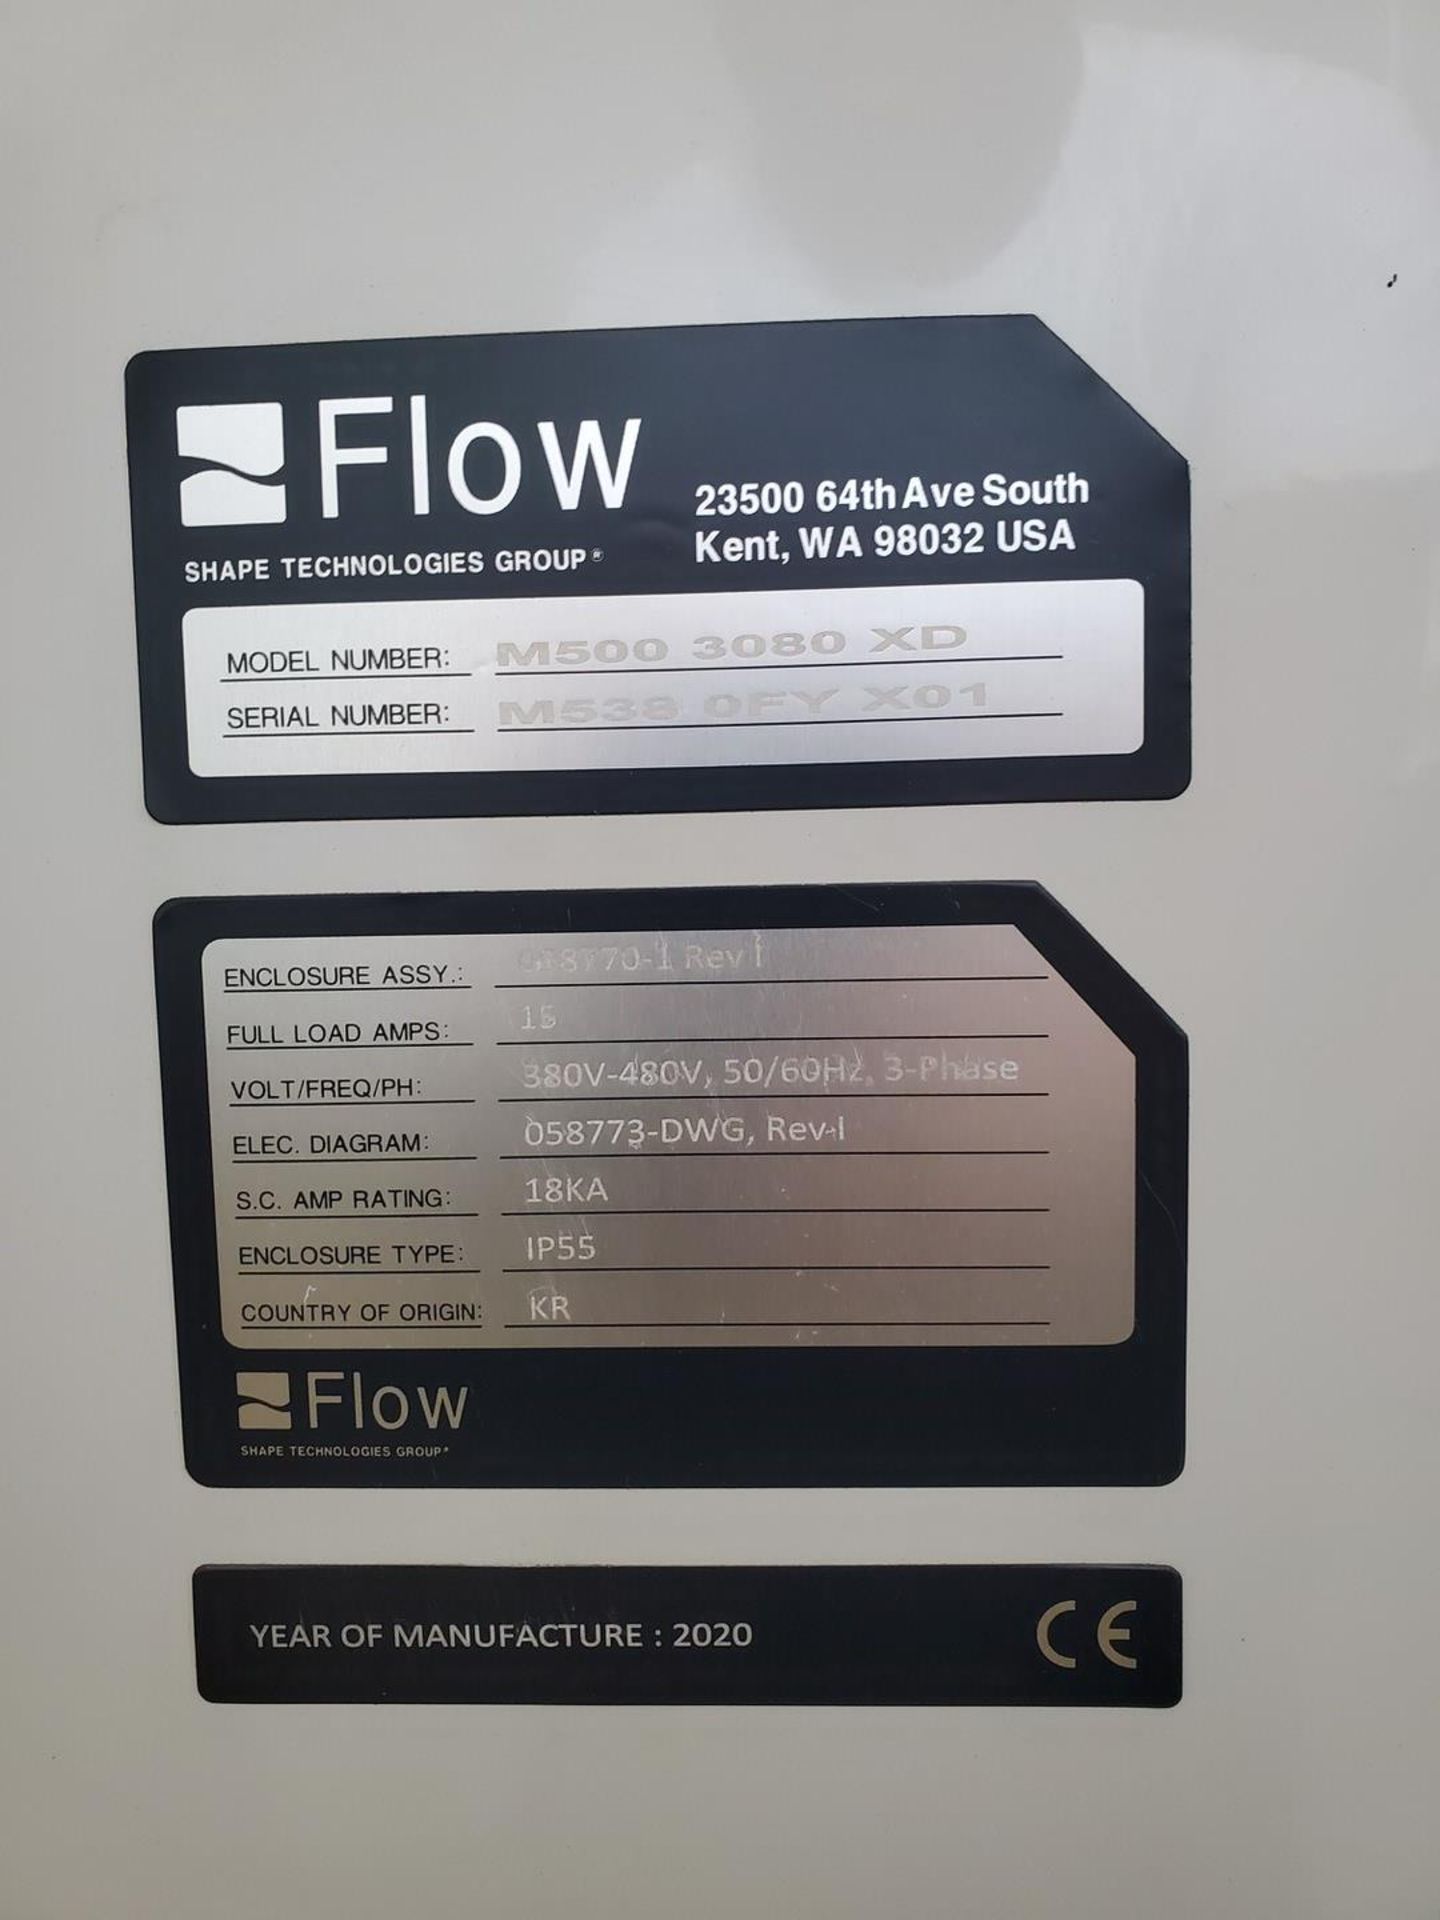 2020 Flow M500 3080 XD Water Jet Cutting Machine - Image 13 of 45